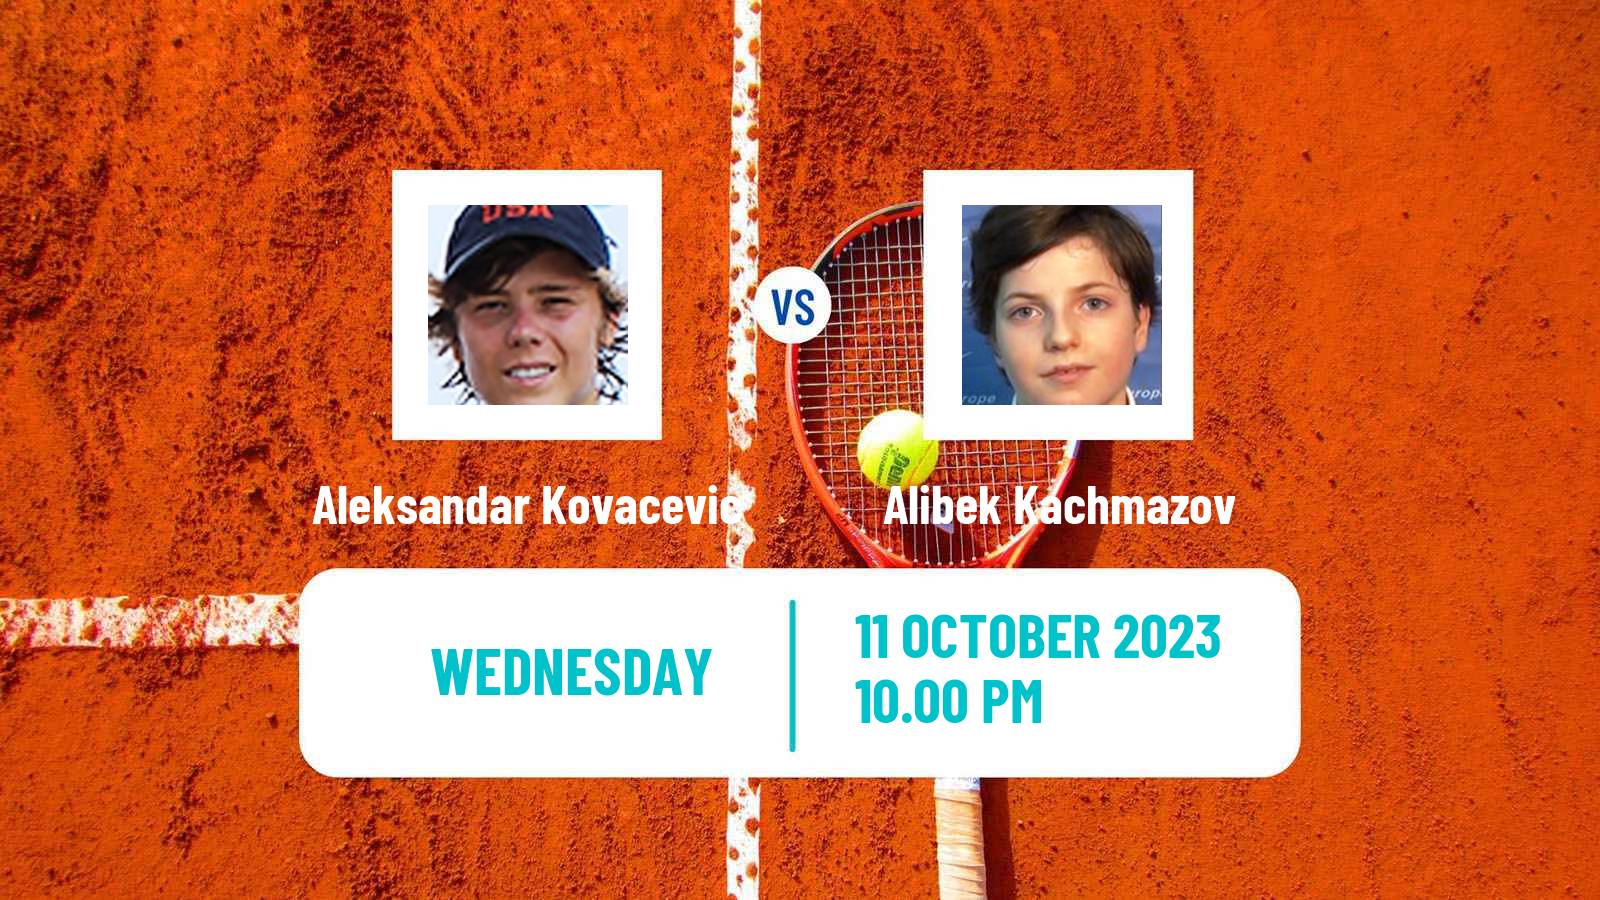 Tennis Shenzhen 2 Challenger Men Aleksandar Kovacevic - Alibek Kachmazov